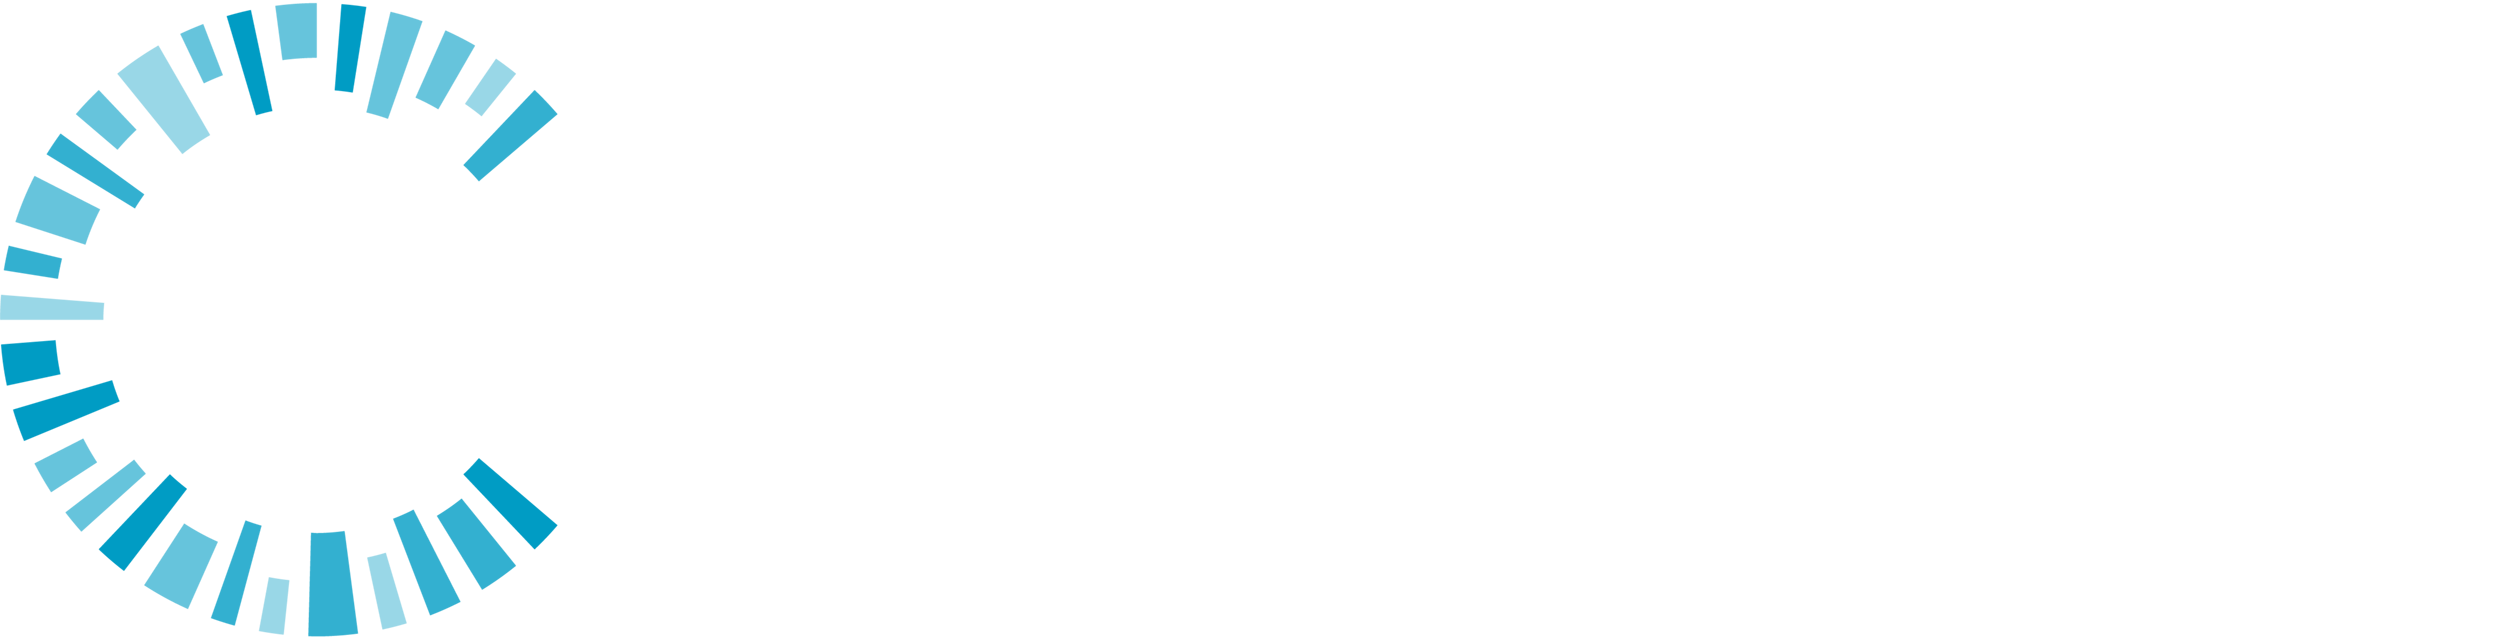 CISPA - Helmholz-Center for Information Security gGmbH